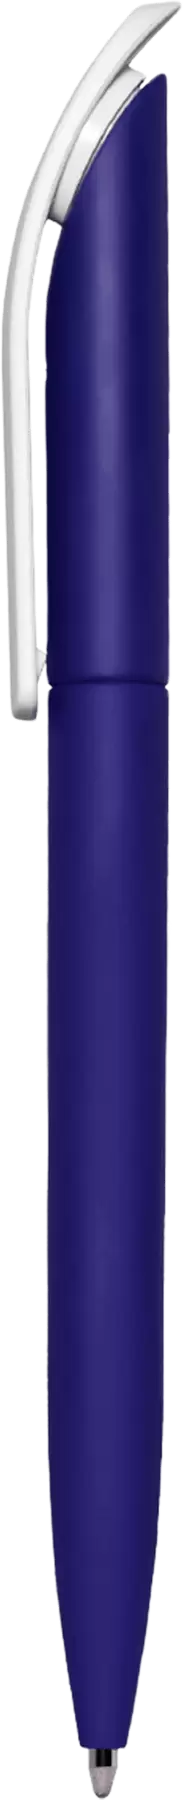 Ручка VIVALDI SOFT Темно-синяя 1335-14